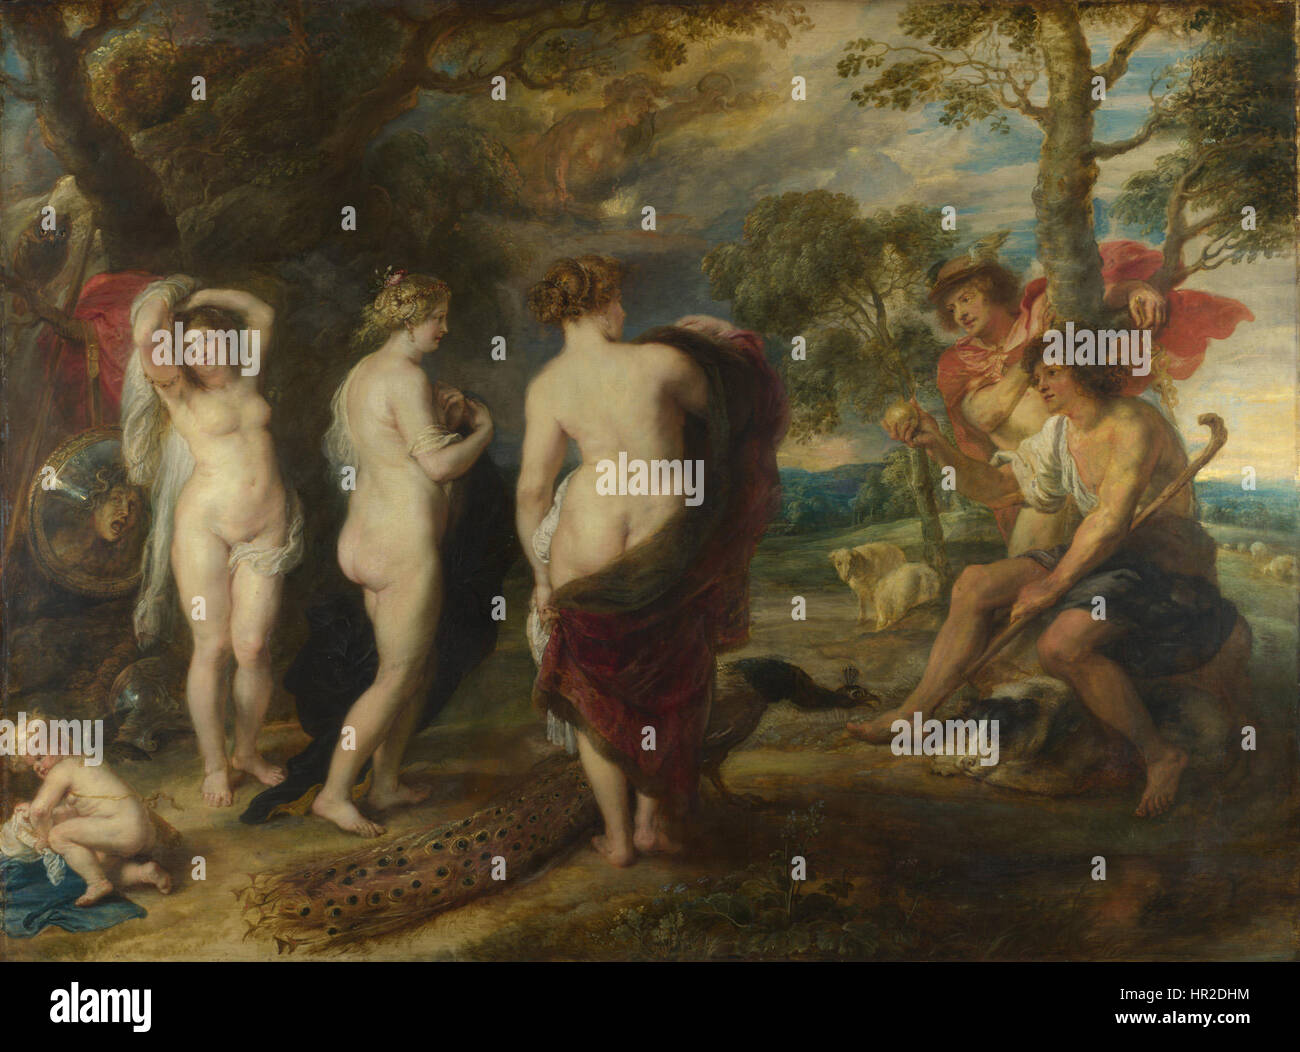 Peter Paul Rubens - The Judgement of Paris - Google Art Project Stock Photo